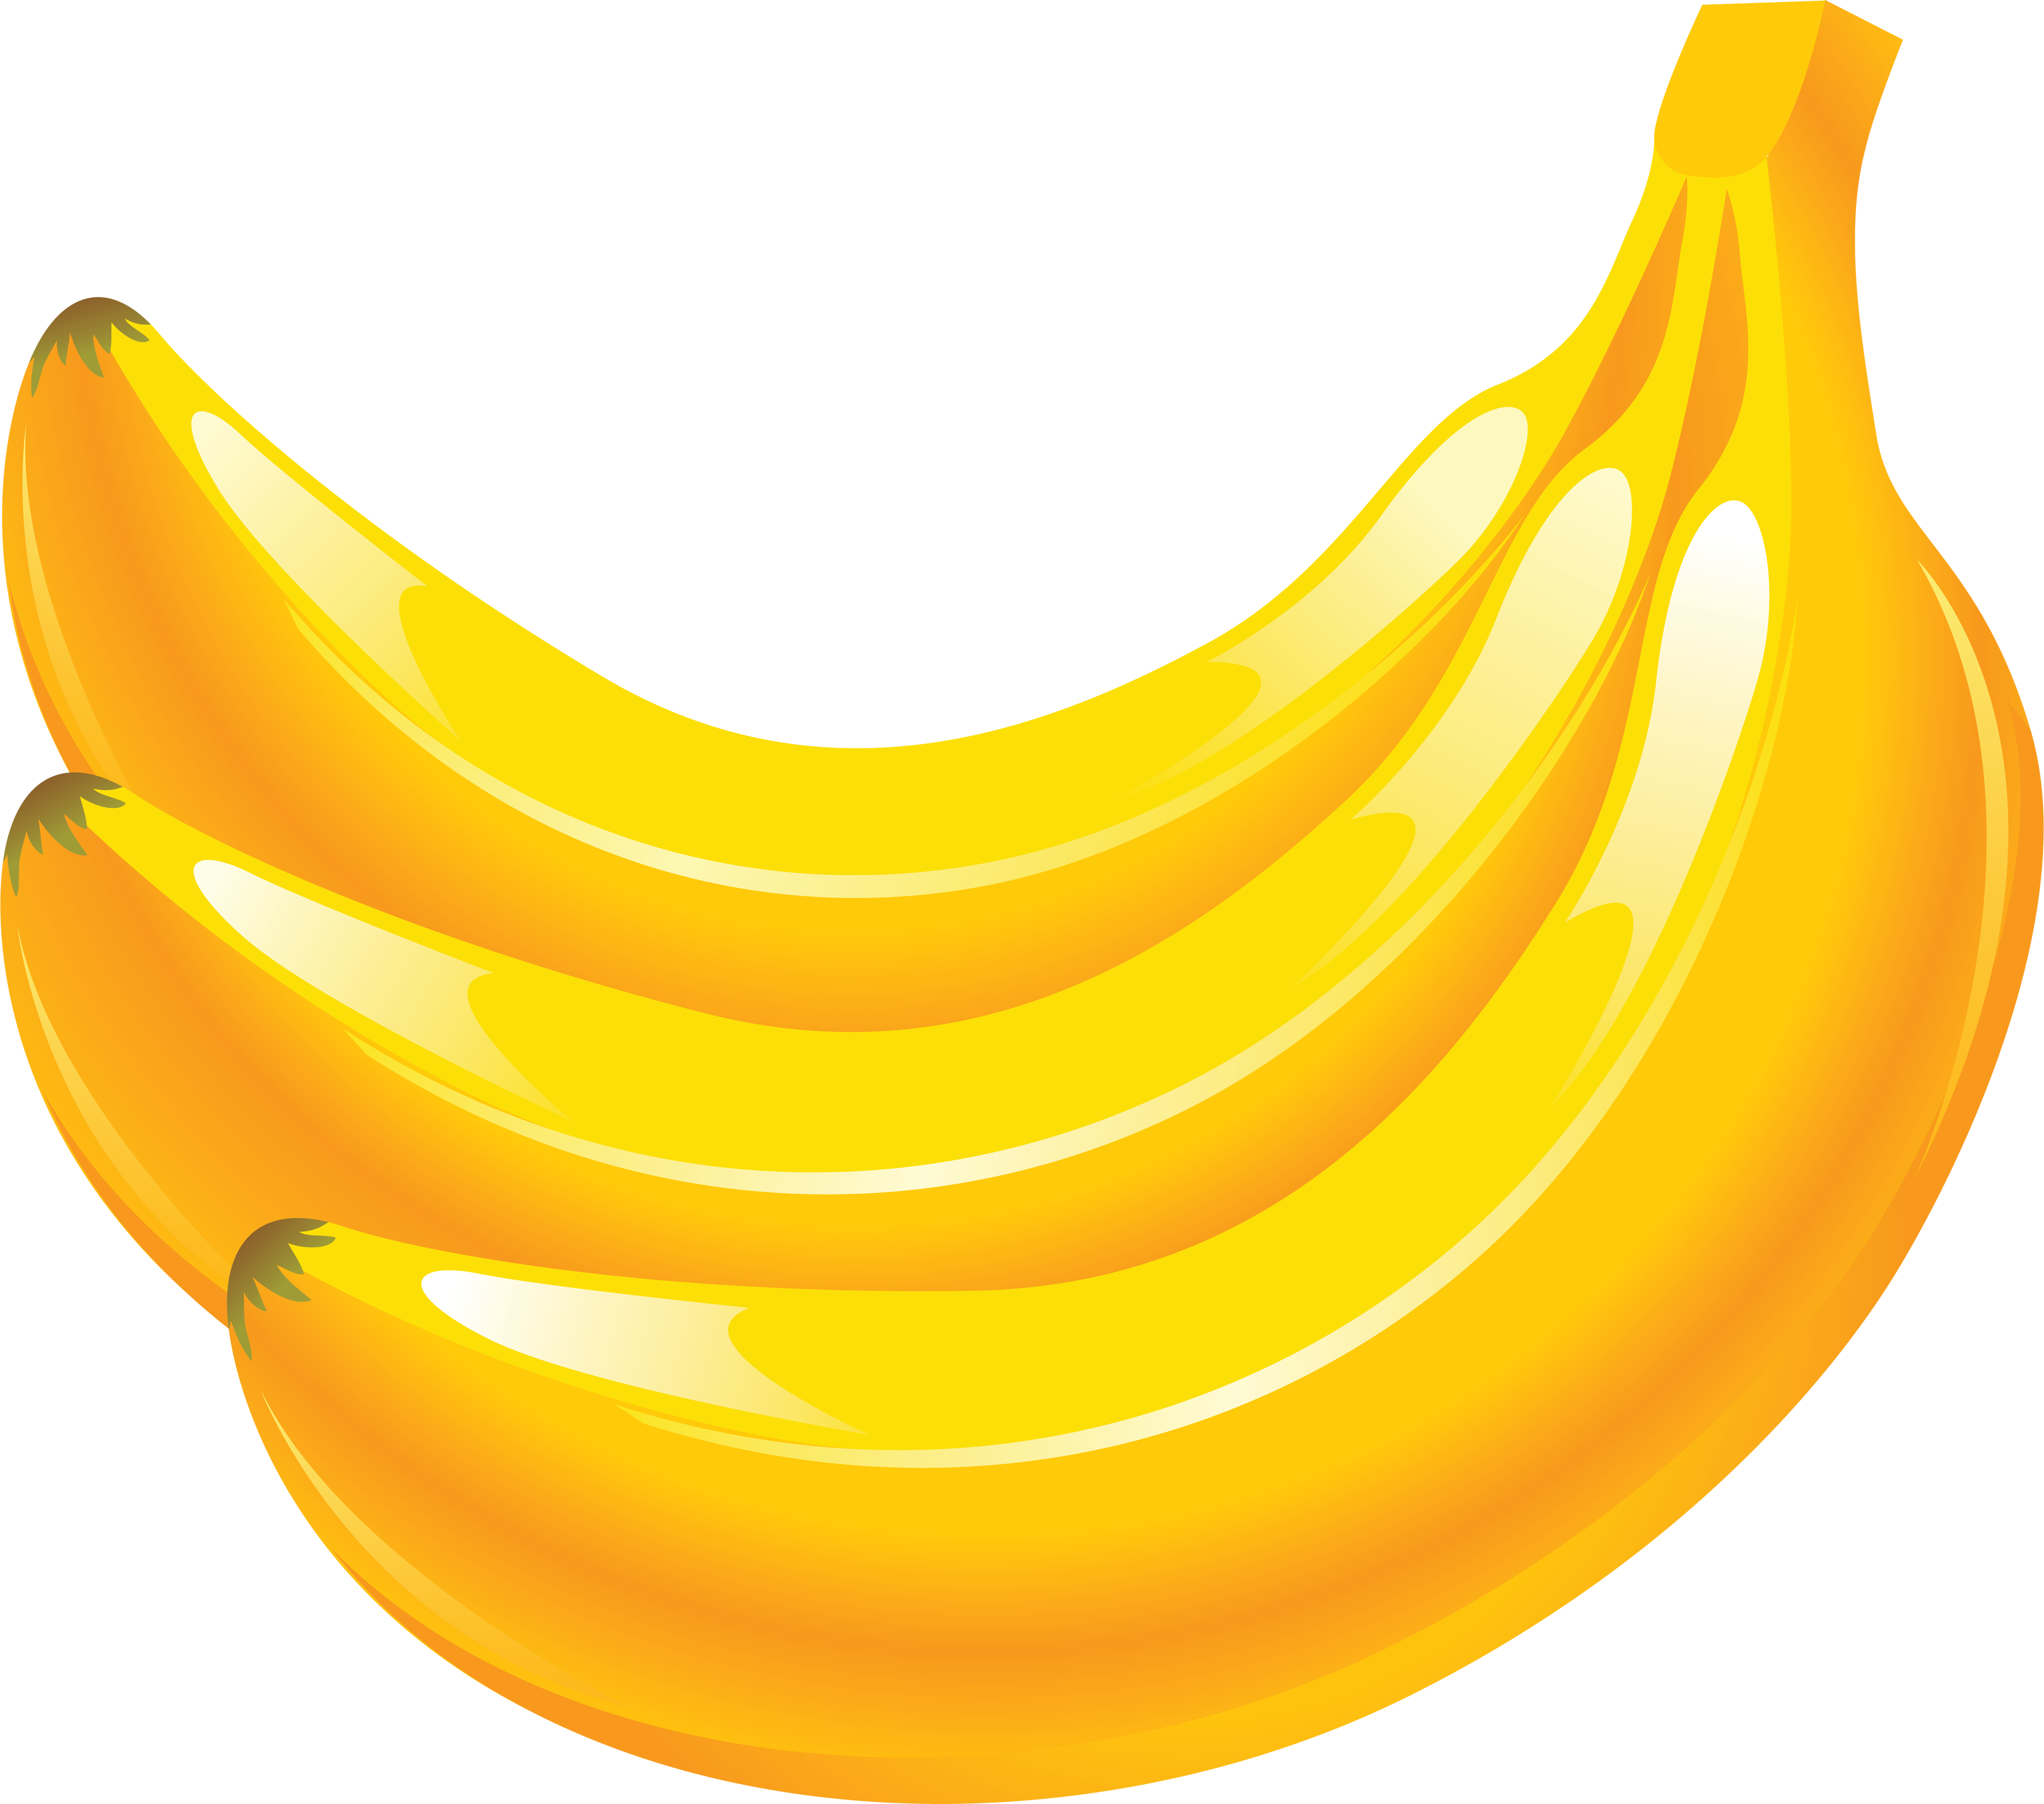 Download PNG image: yellow bananas PNG image